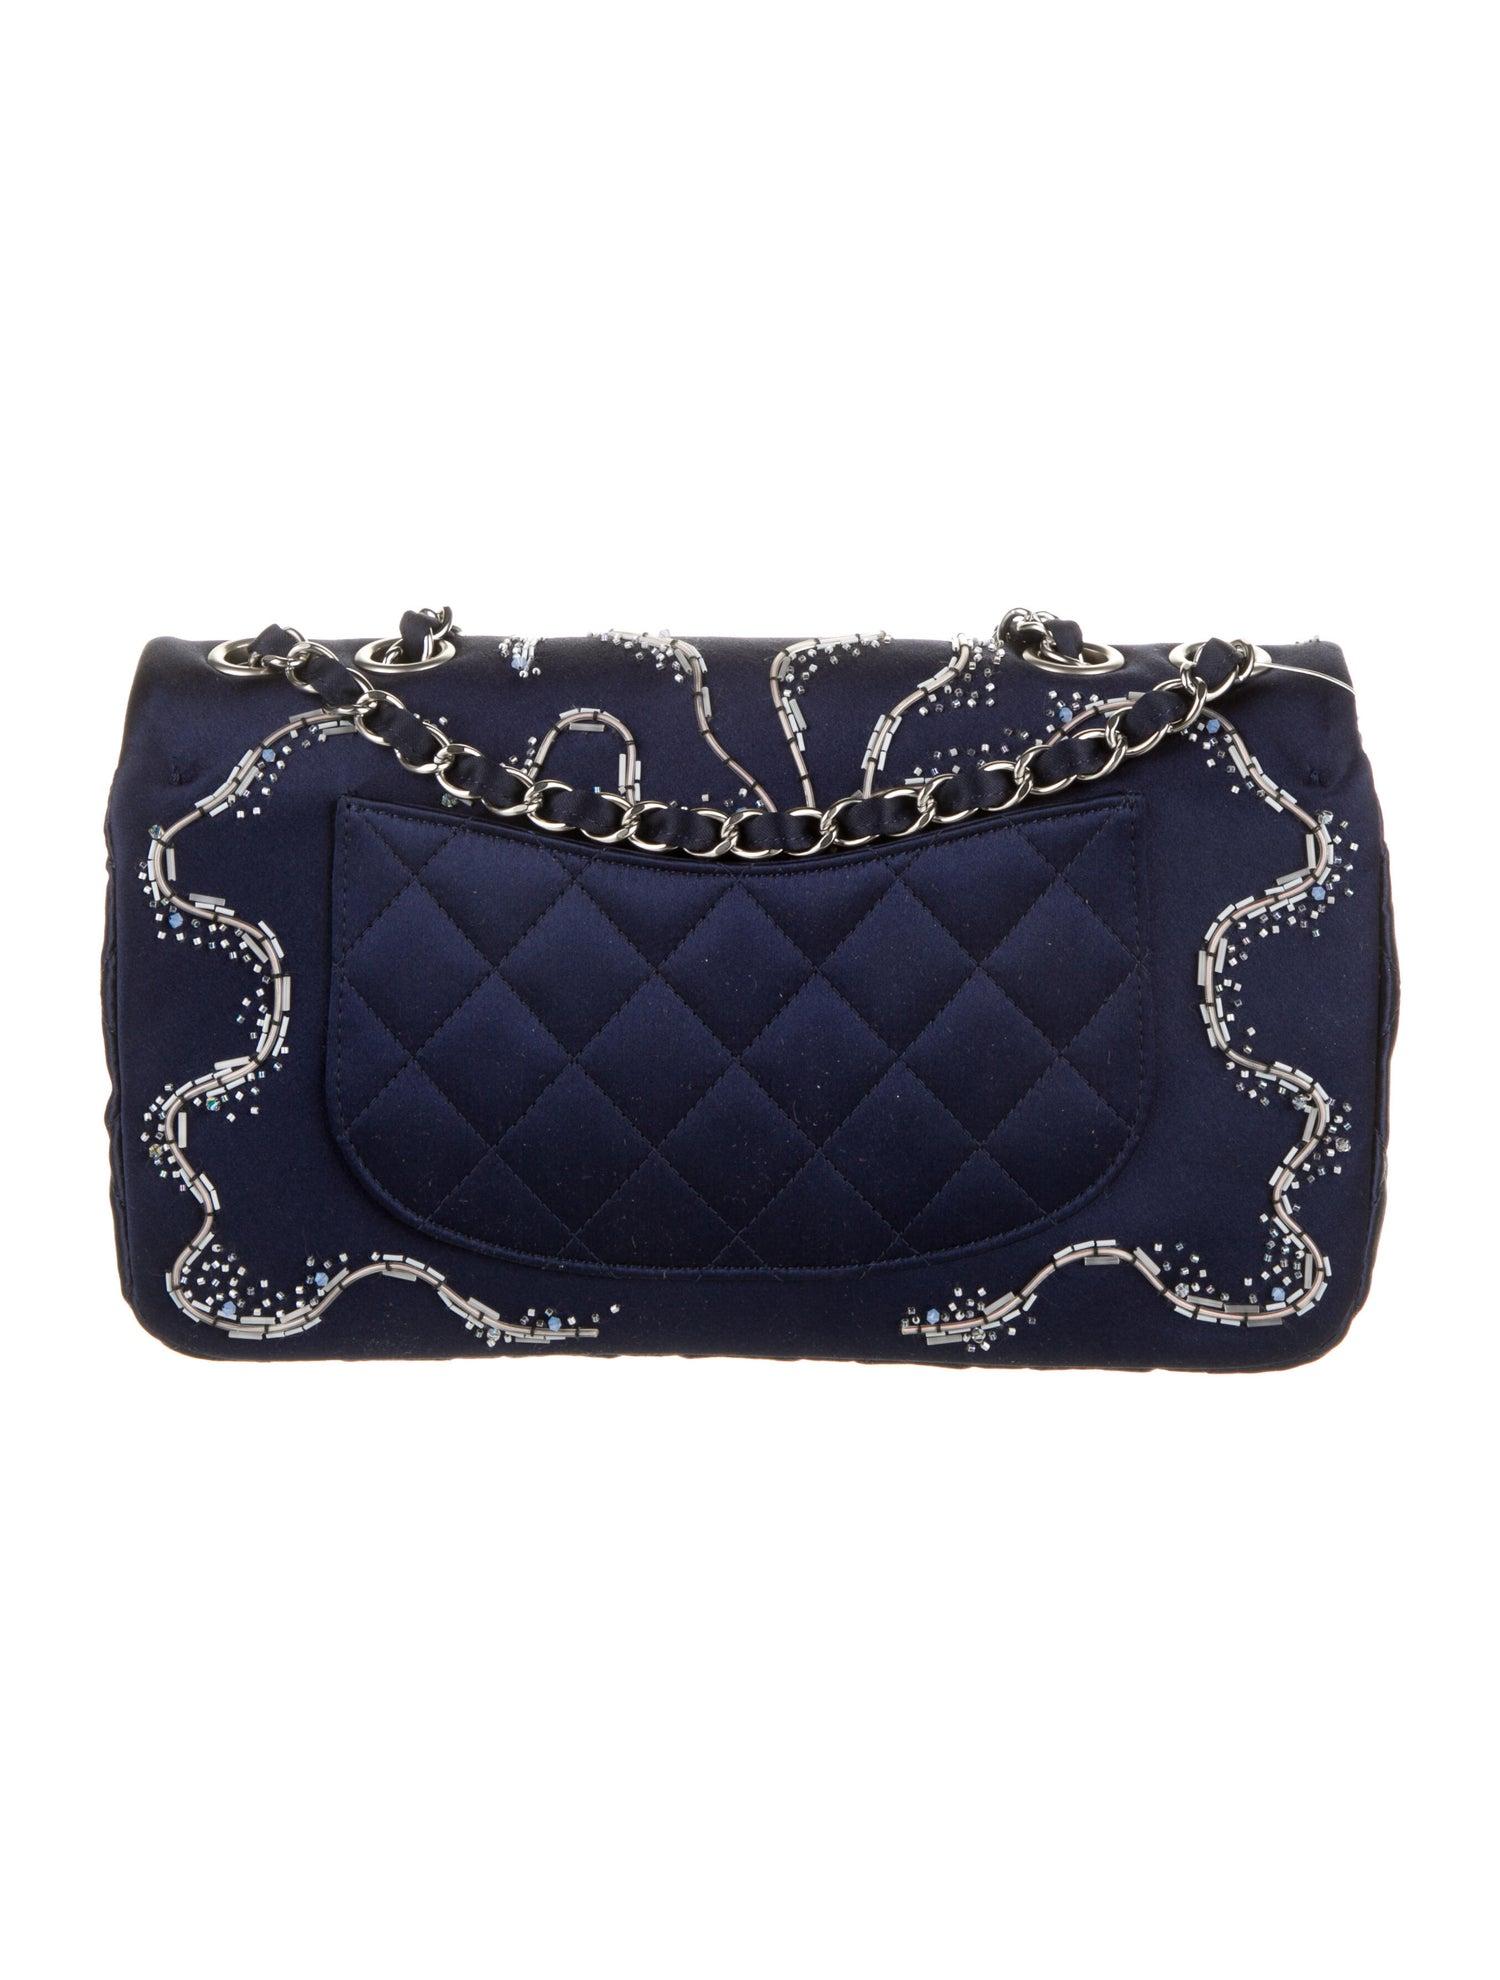 Black Chanel 2015 Rare Embellished Satin Blue Illuminating Medium Classic Flap Bag For Sale